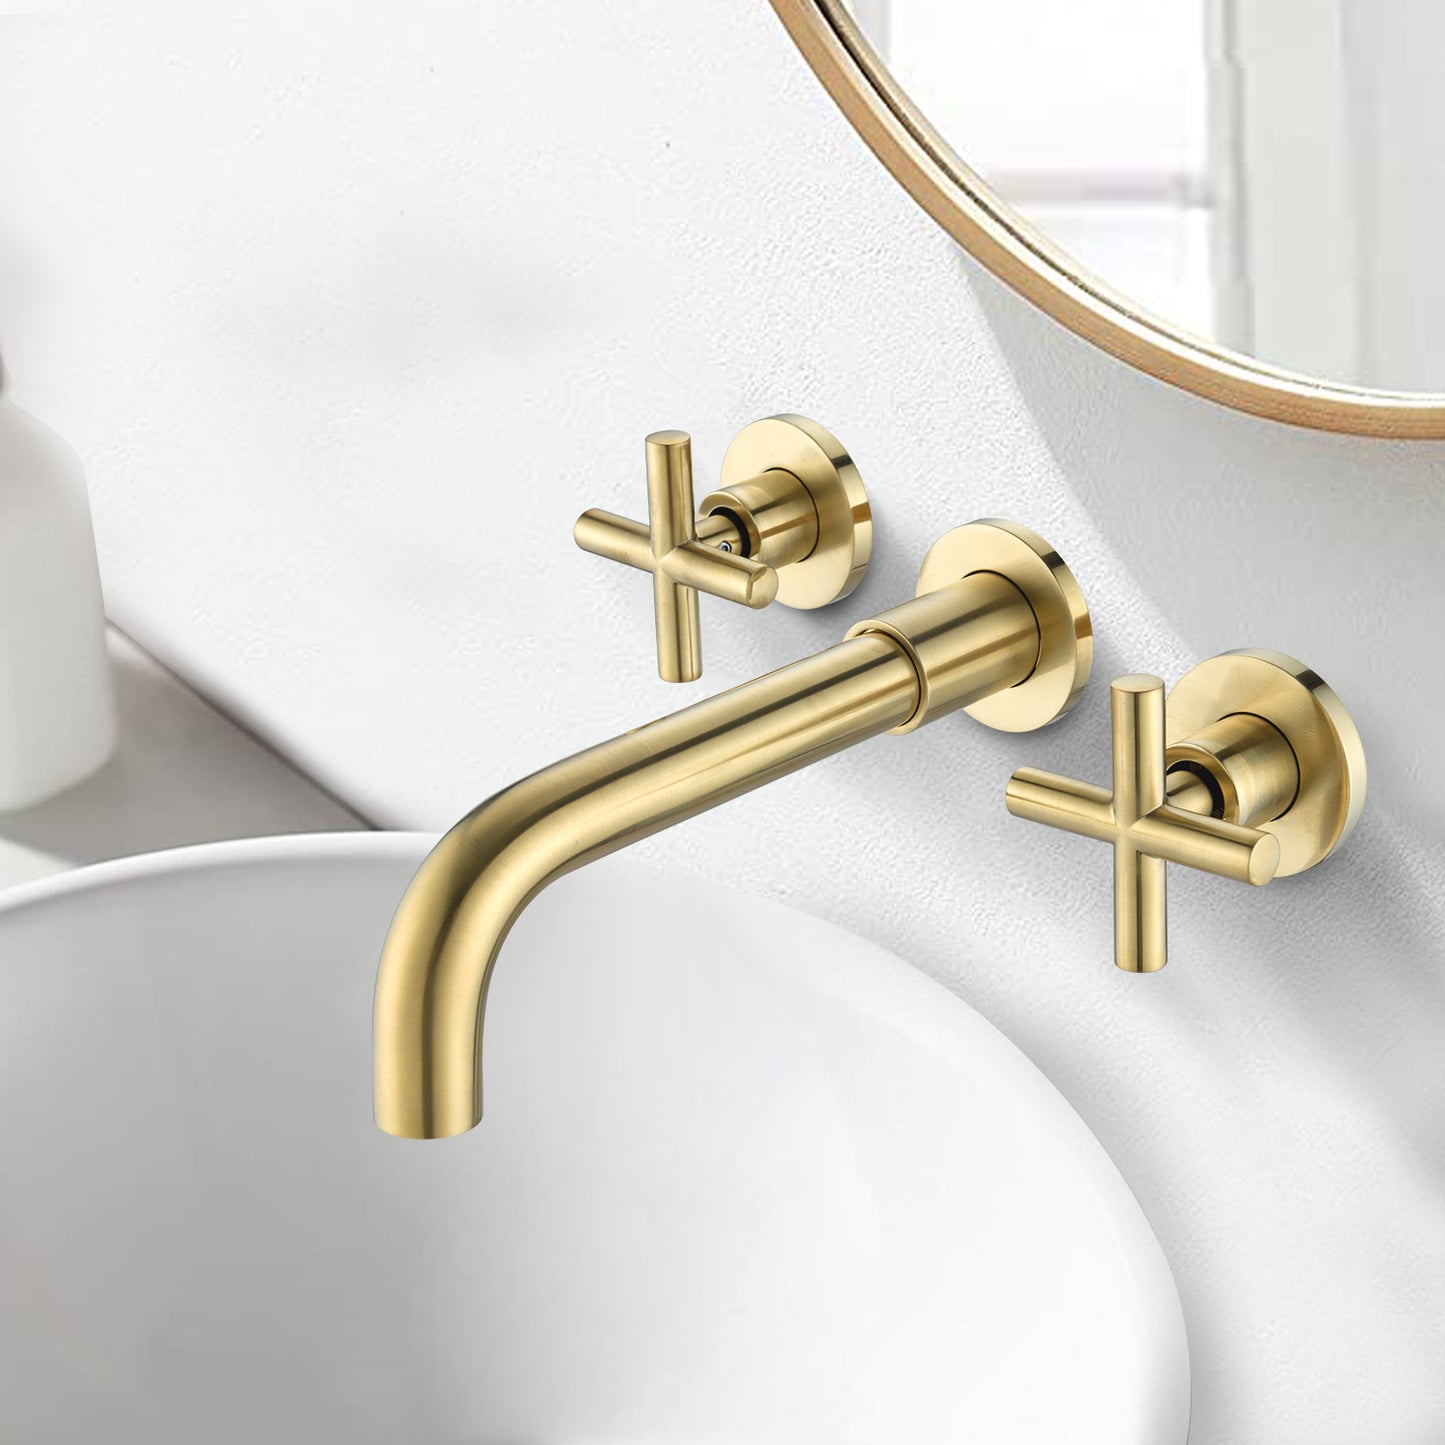 Luxurious Gold Wall-Mounted Brass Bathroom Sink Faucet